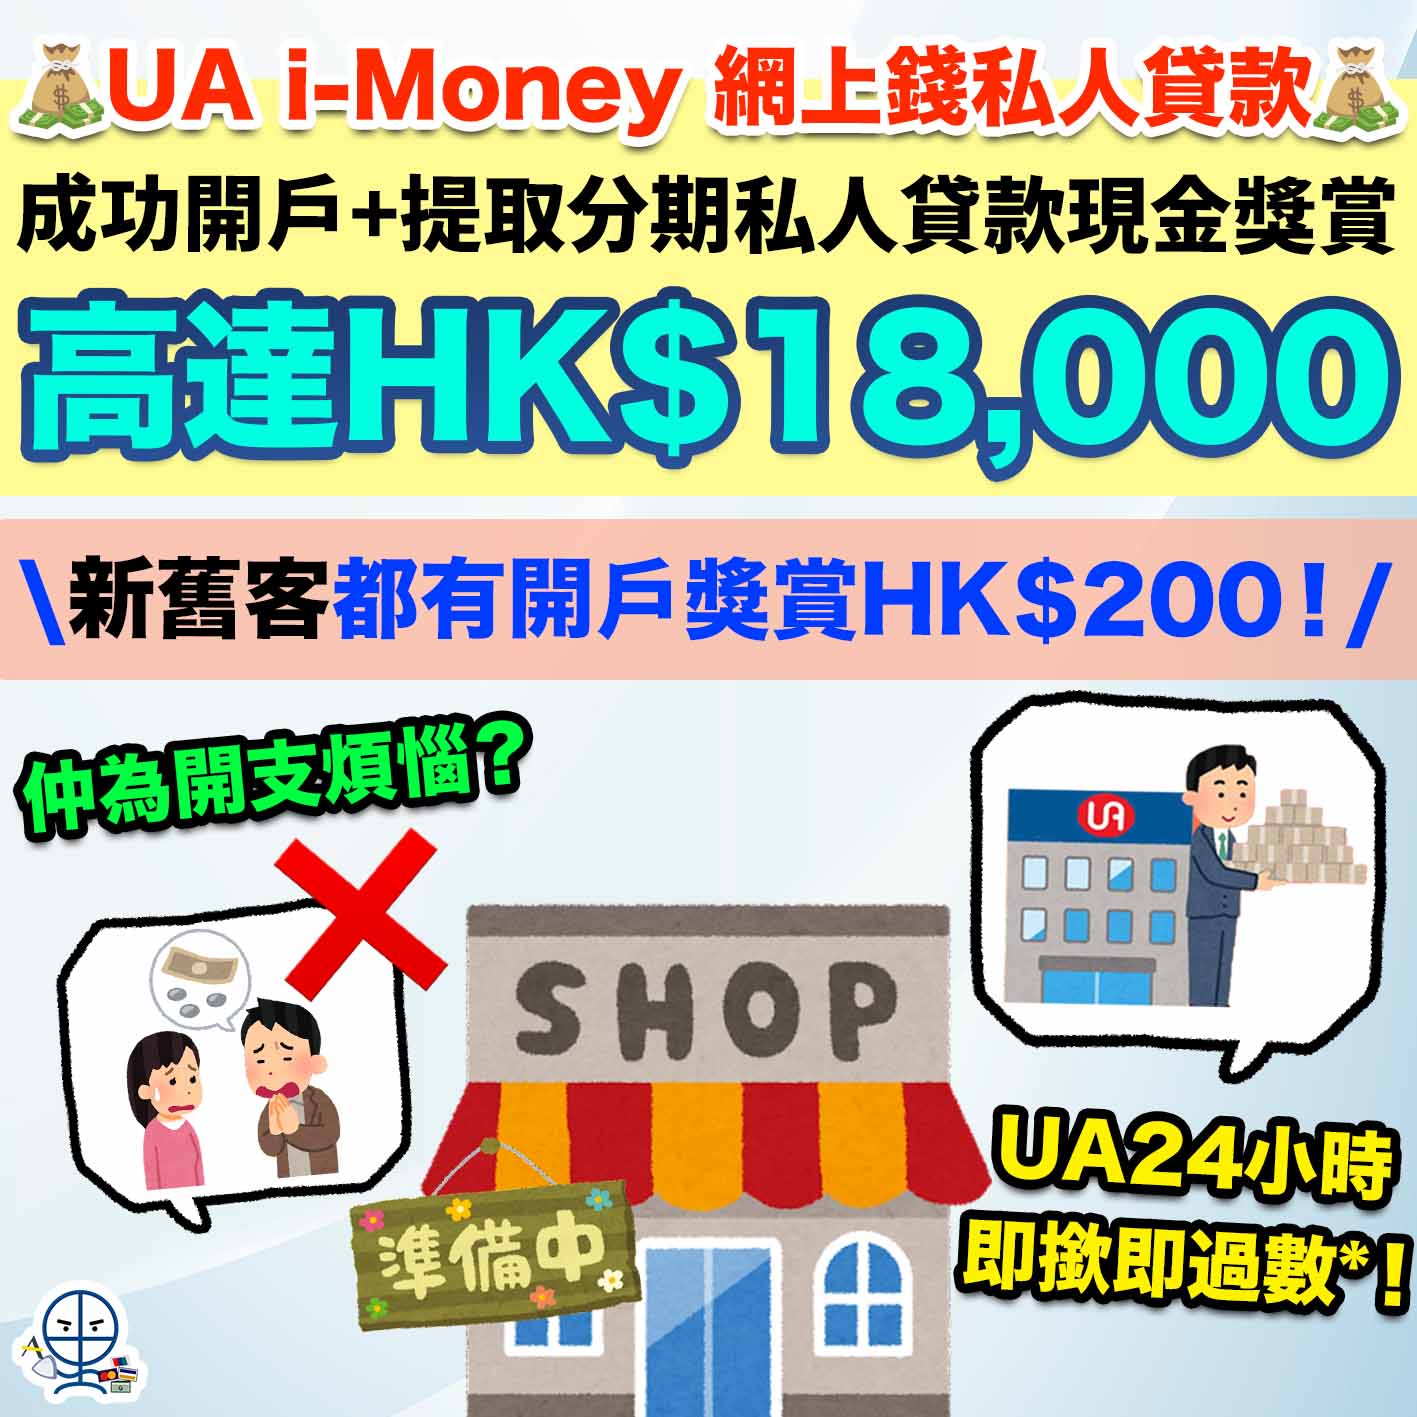 UA i-Money 網上錢私人貸款-UA e-Cash 循環備用現金-UA-亞洲聯合財務有限公司